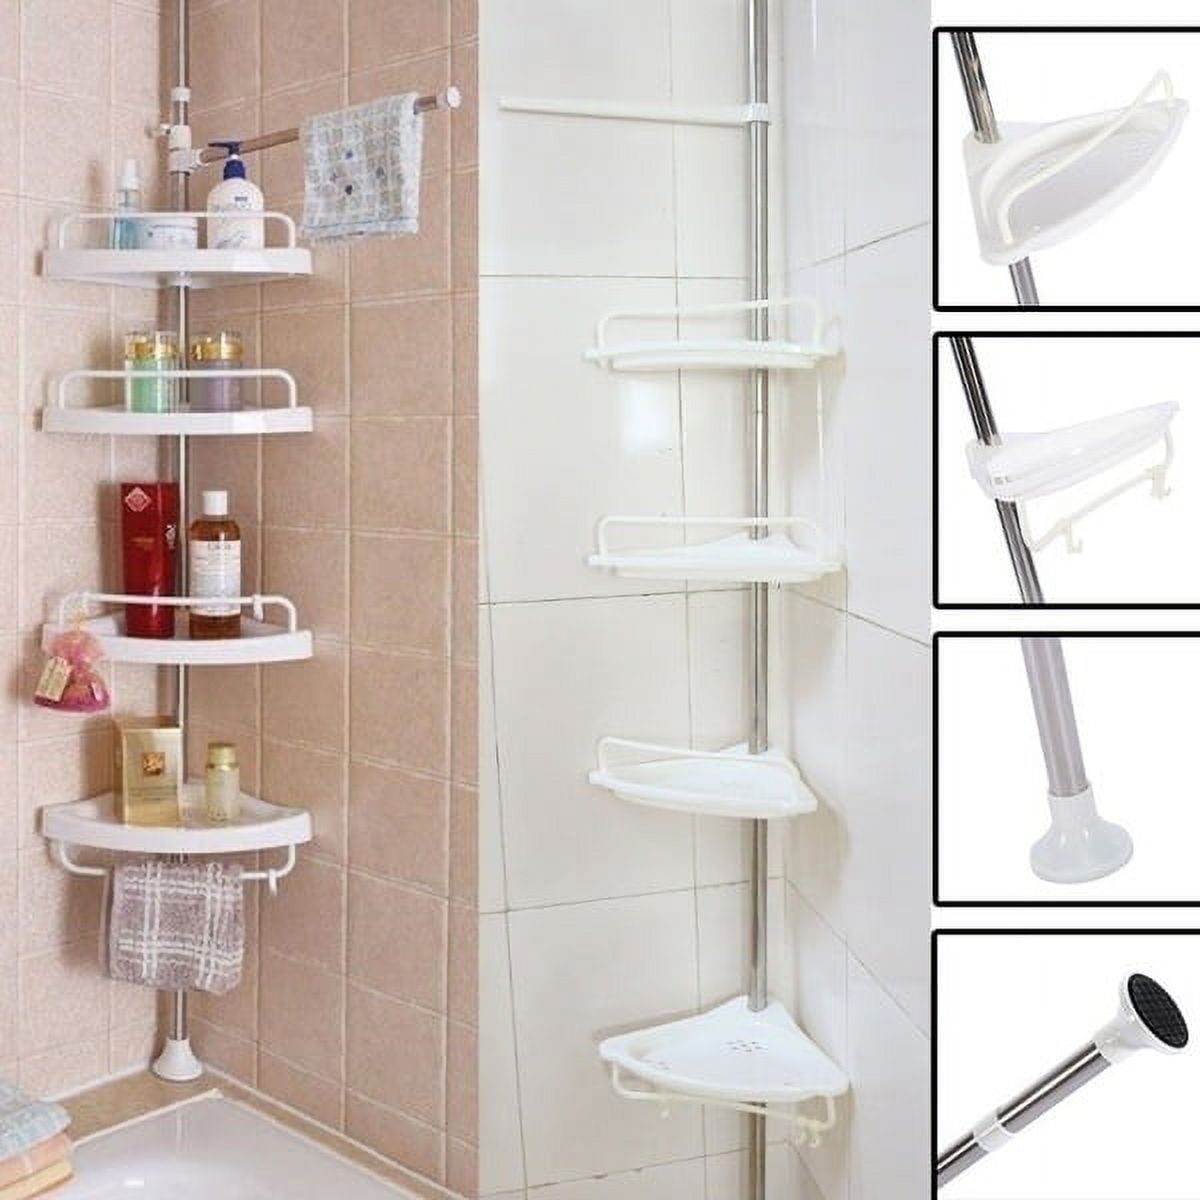 Vobor 4 Layer White Bathroom Shower Shelf Corner Organizer Shower Caddy  with 4 Shelves, White